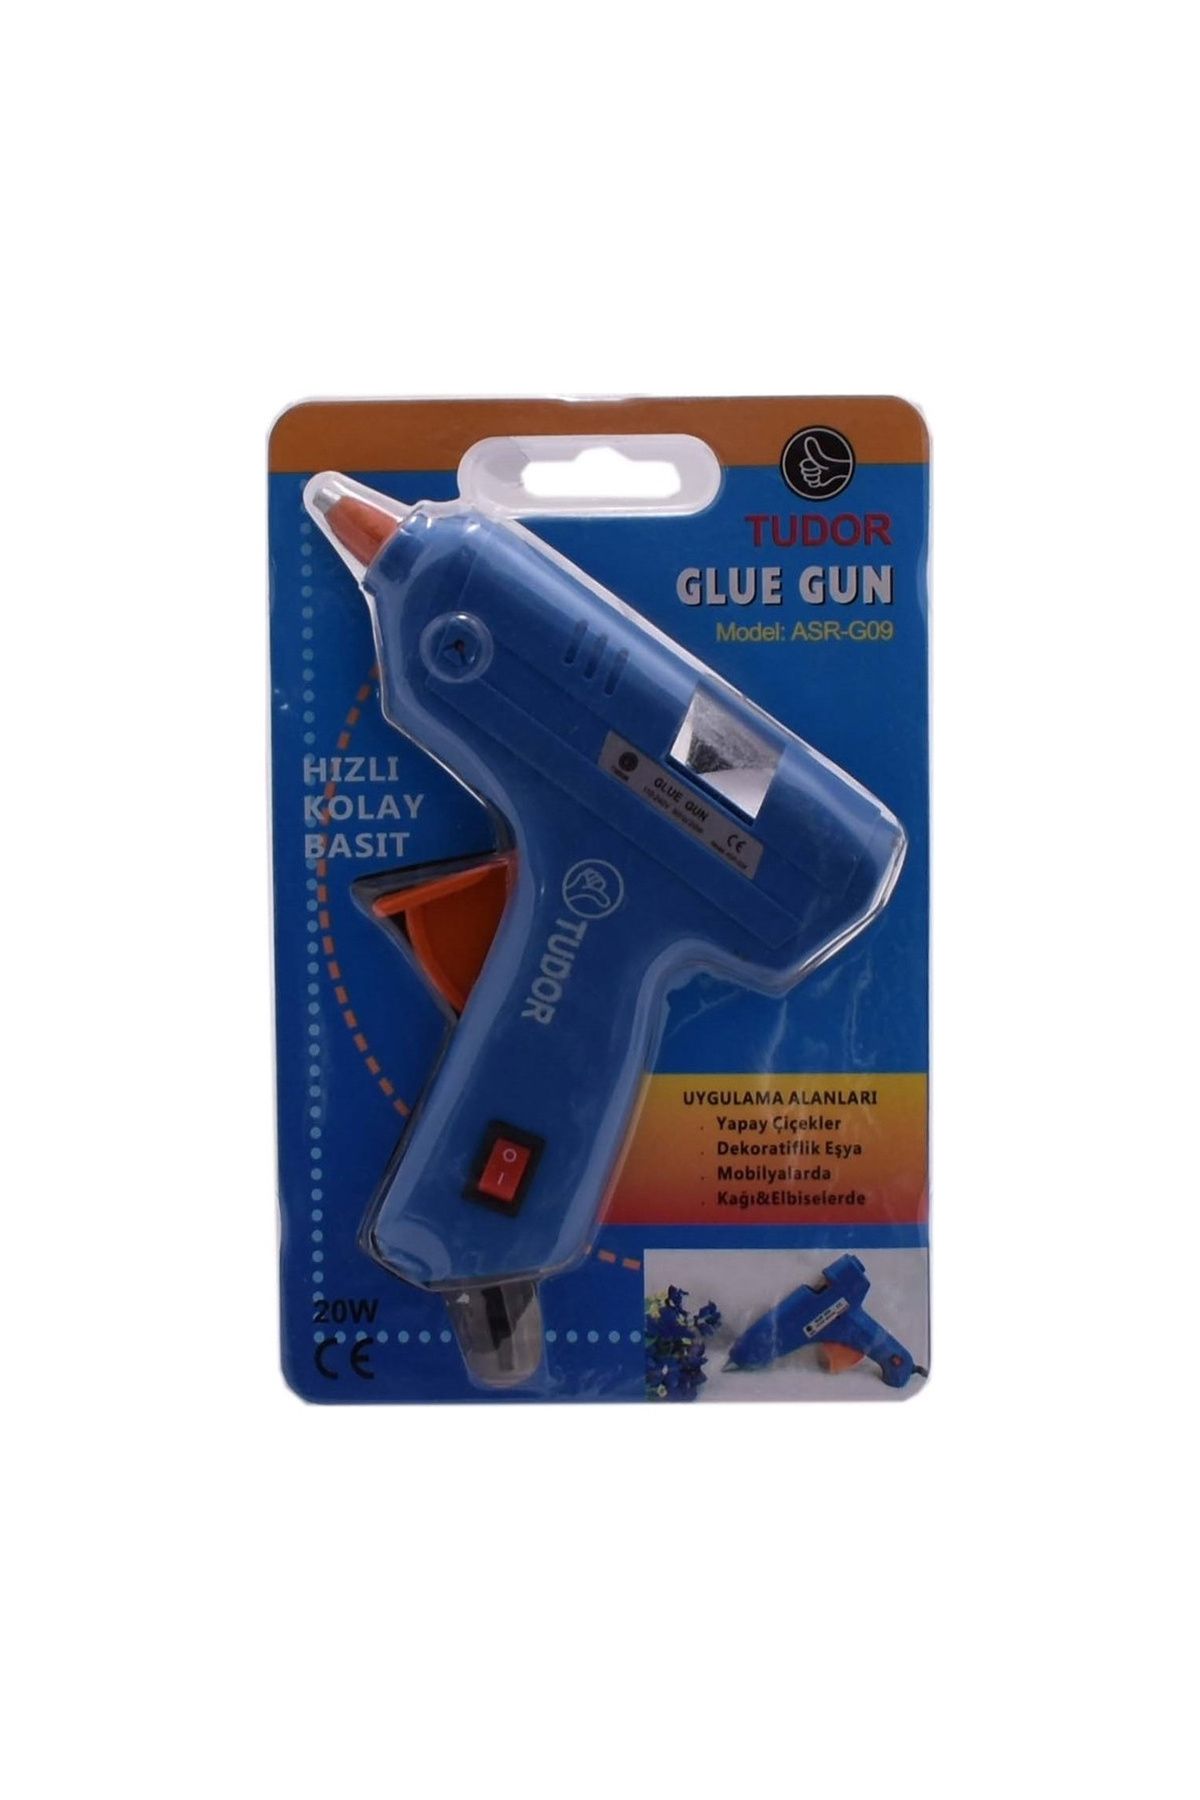 MCEM STORE Küçük Mum Silikon Tabancası Asr-G09 - Glue Gun